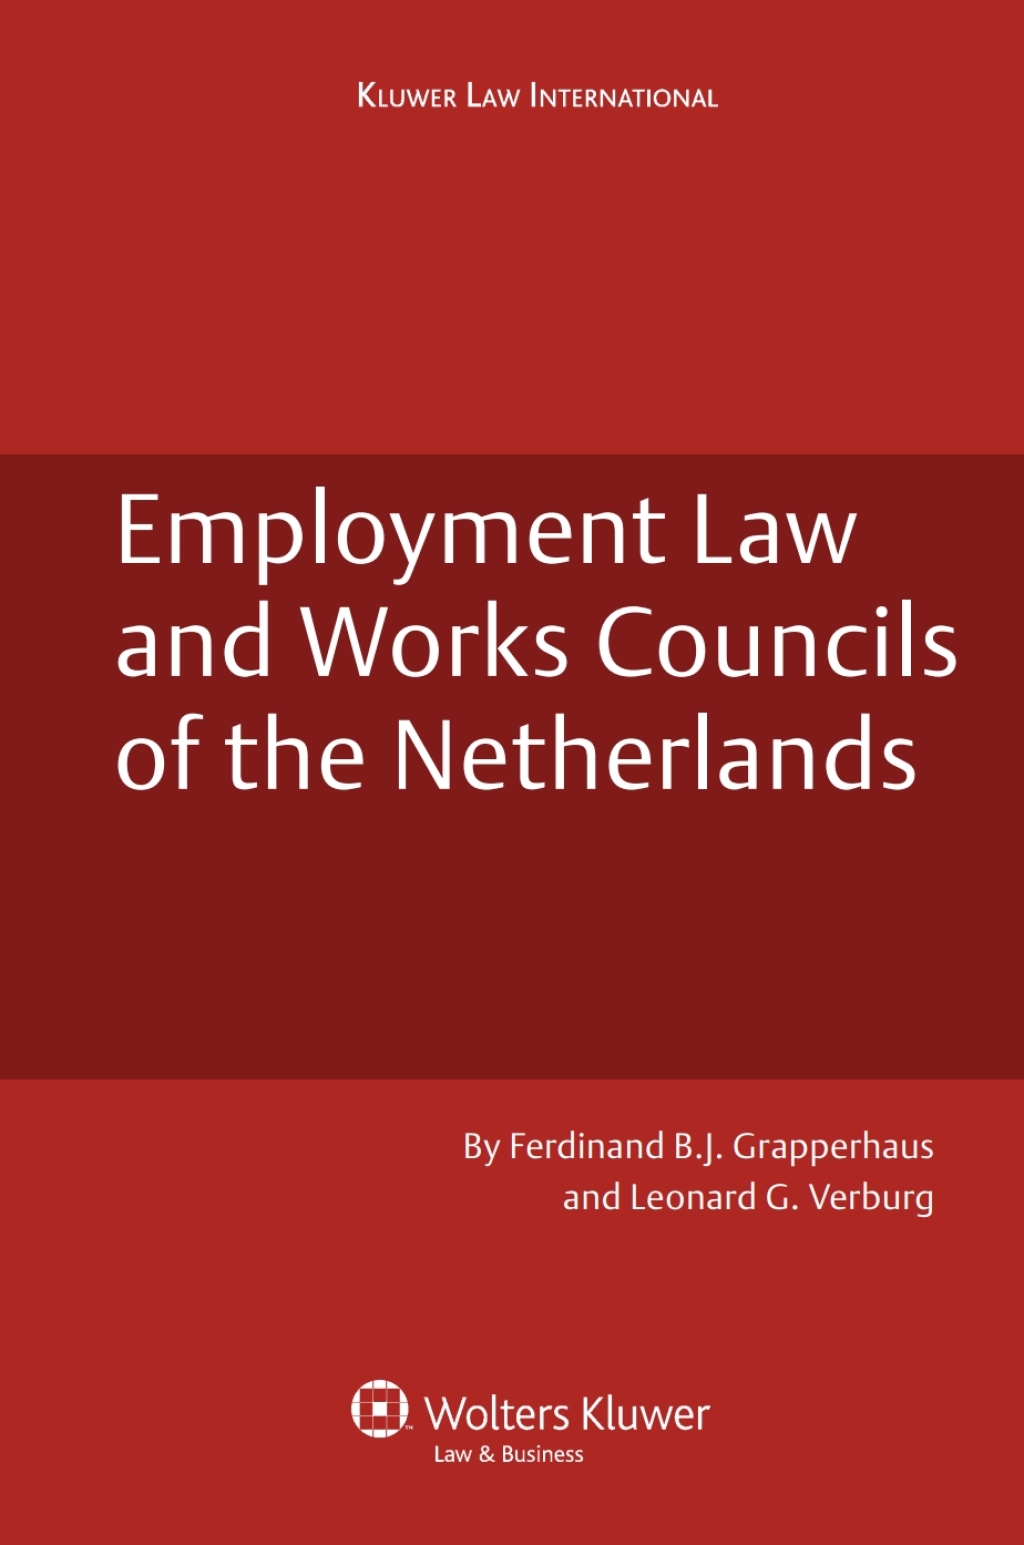 Employment Law and Works Councils of the Netherlands (eBook Rental) - Ferdinand B.J. Grapperhaus; Leonard G. Verburg,